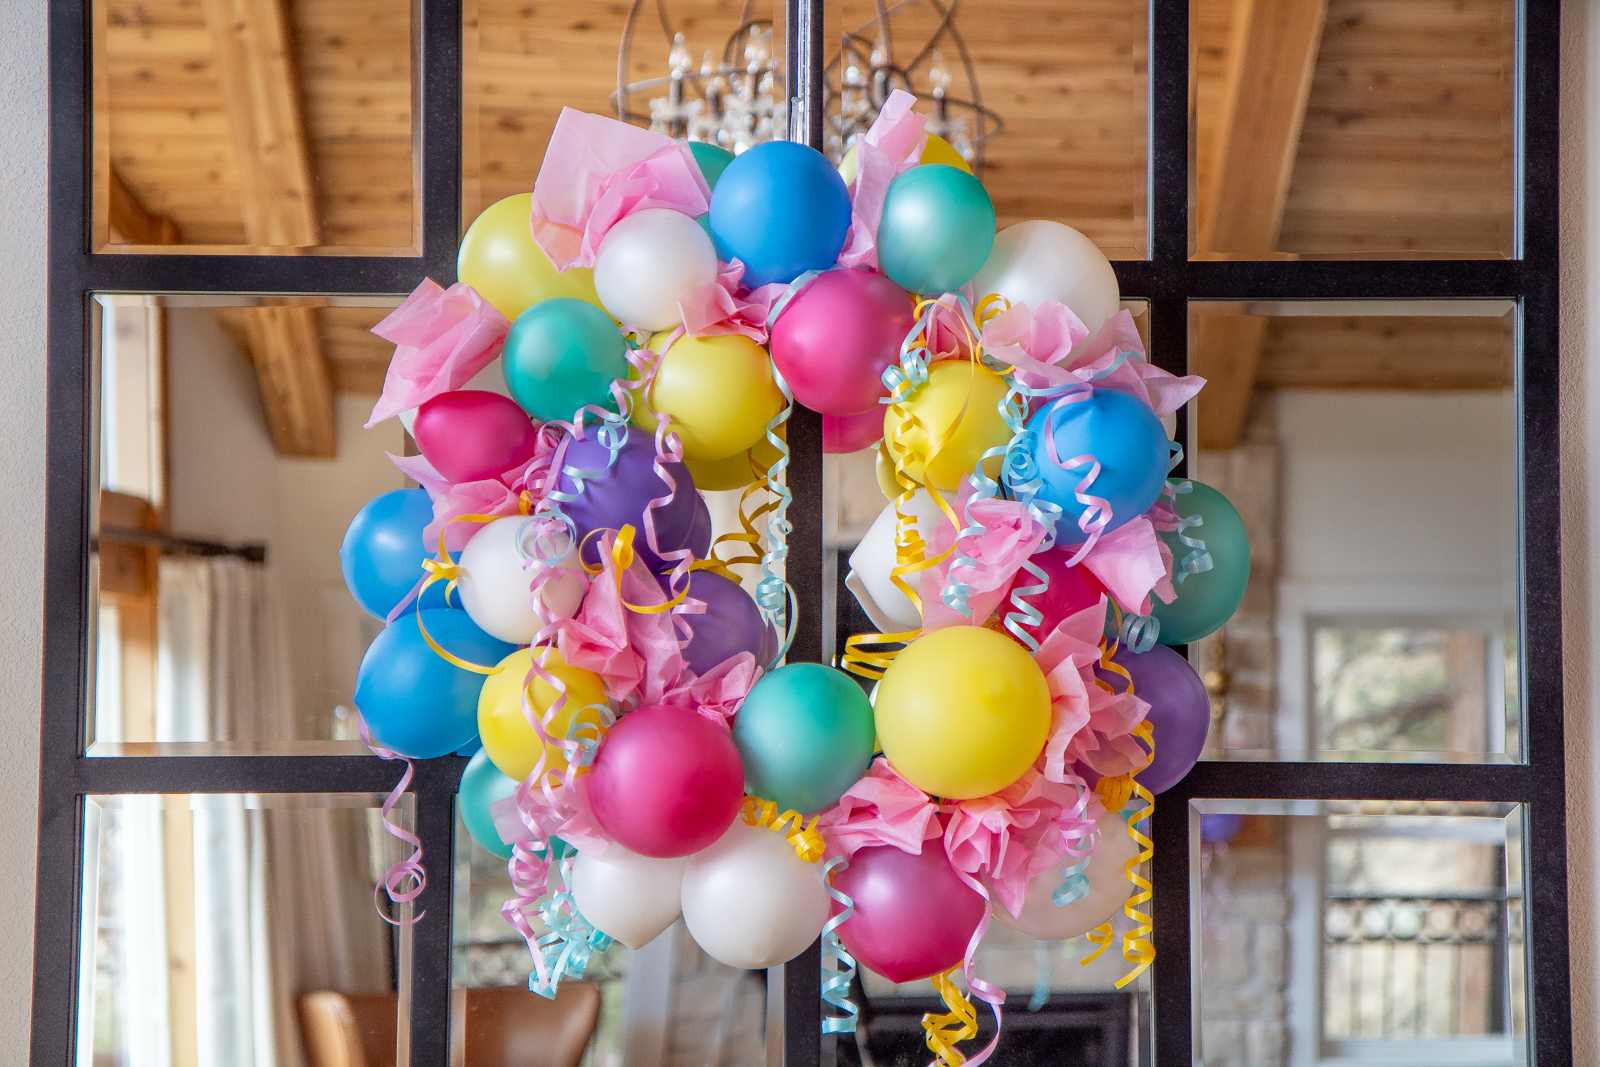 How to make a birthday balloon wreath